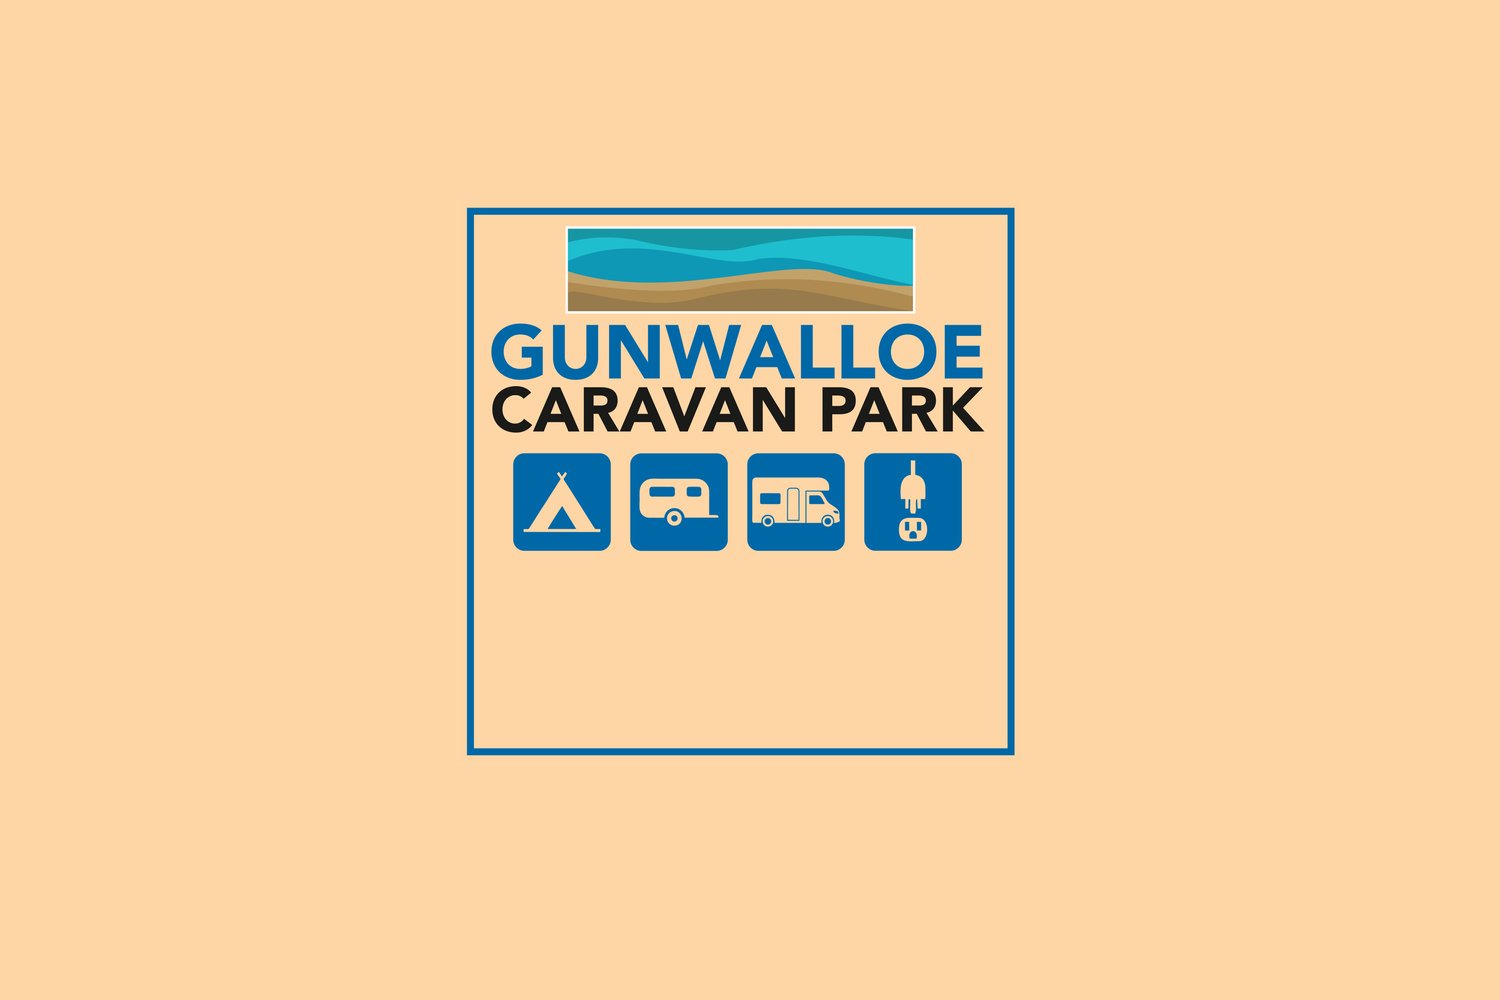 Gunwalloe Caravan Park